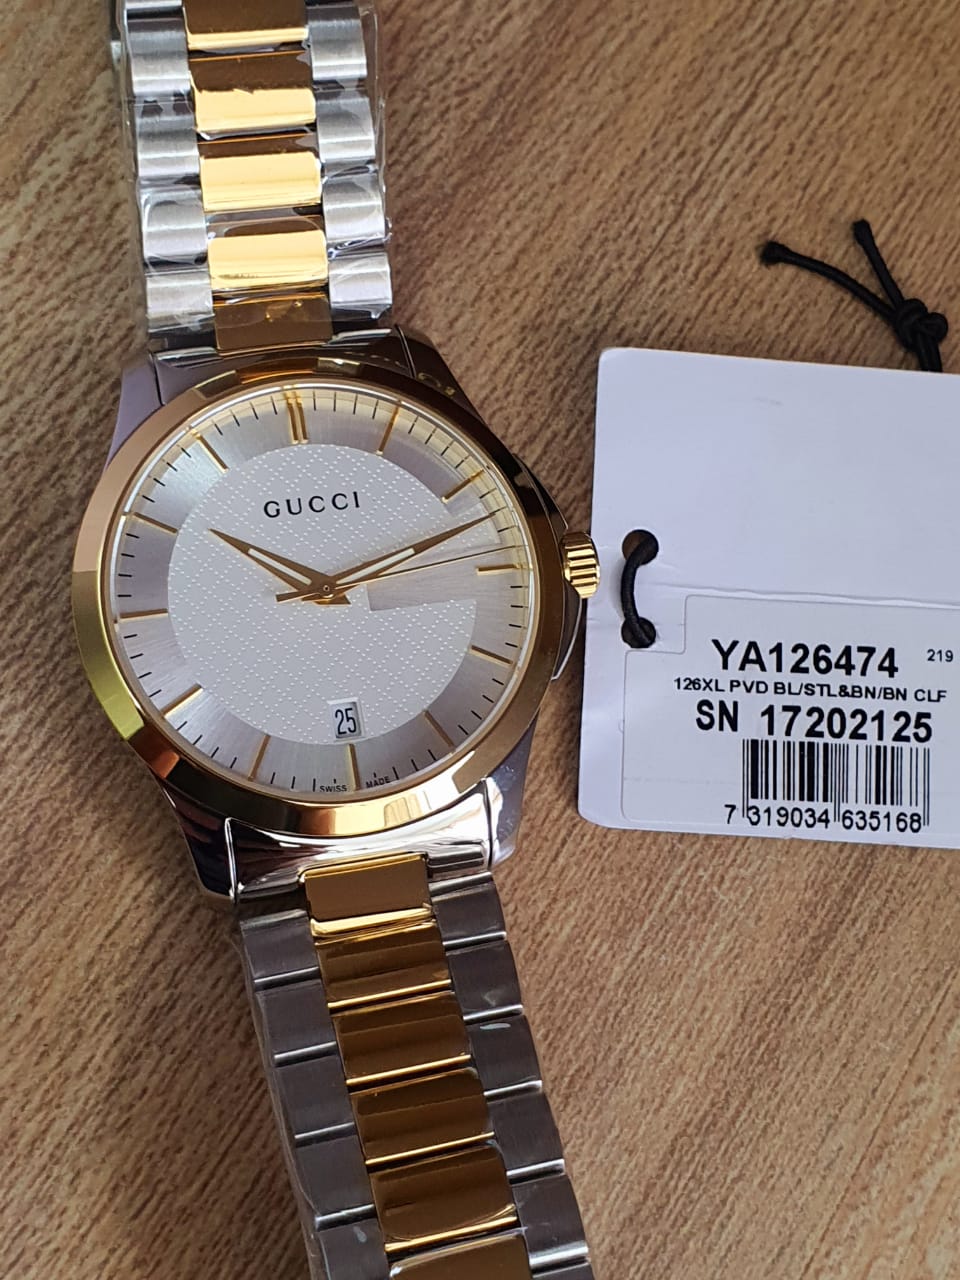 Buy Gucci Men's Swiss Made Quartz Stainless Steel Silver Dial 38mm Watch YA126474 in Pakistan